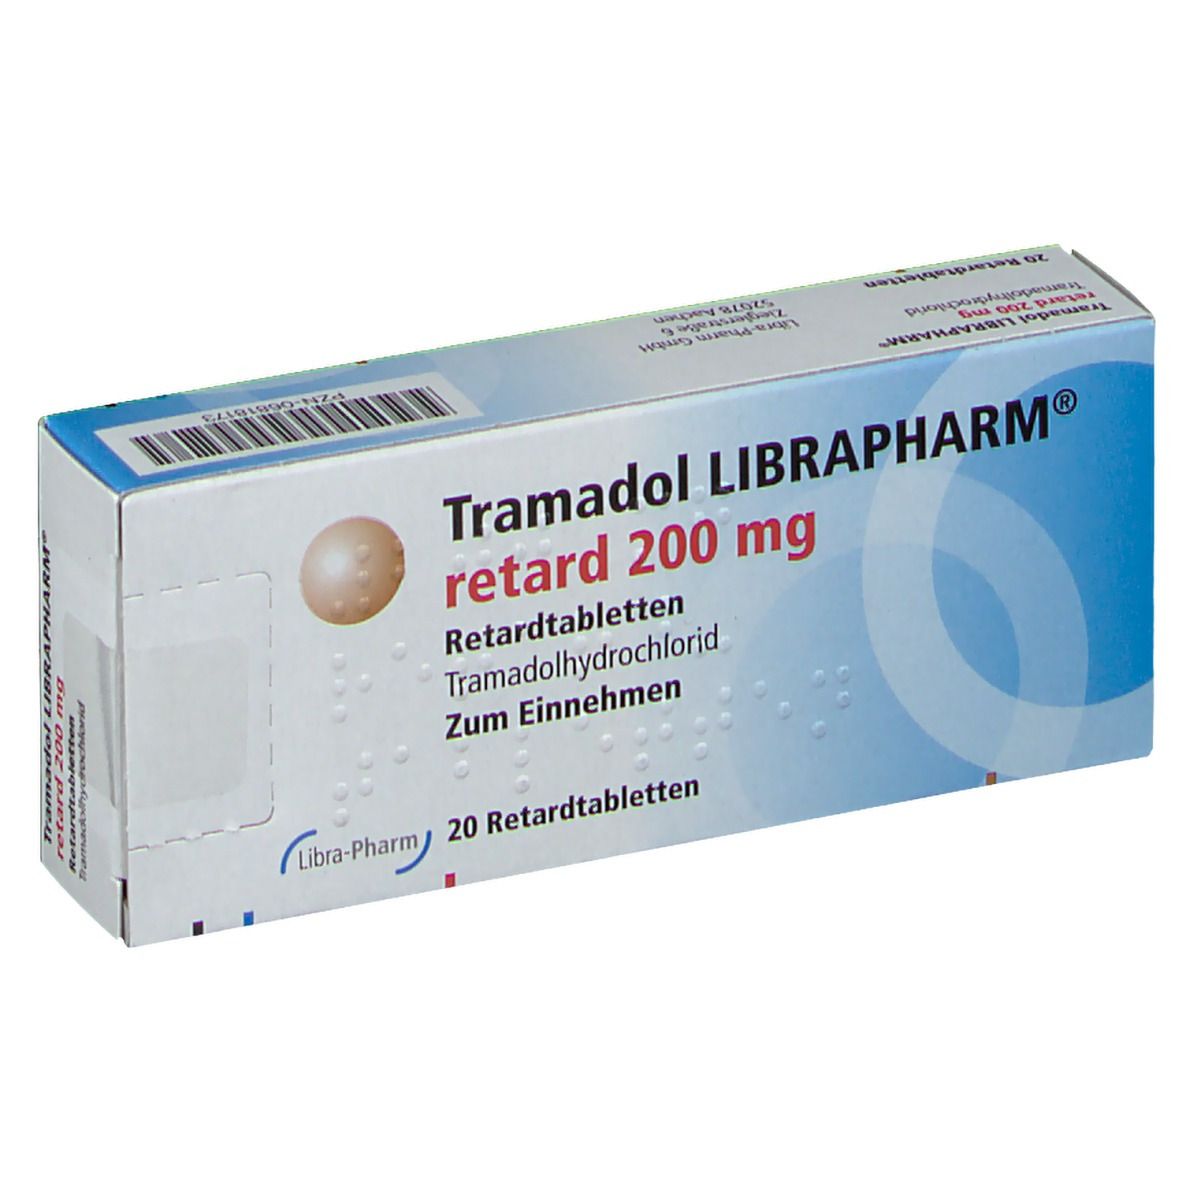 Tramadol LIBRAPHARM® retard 200 mg